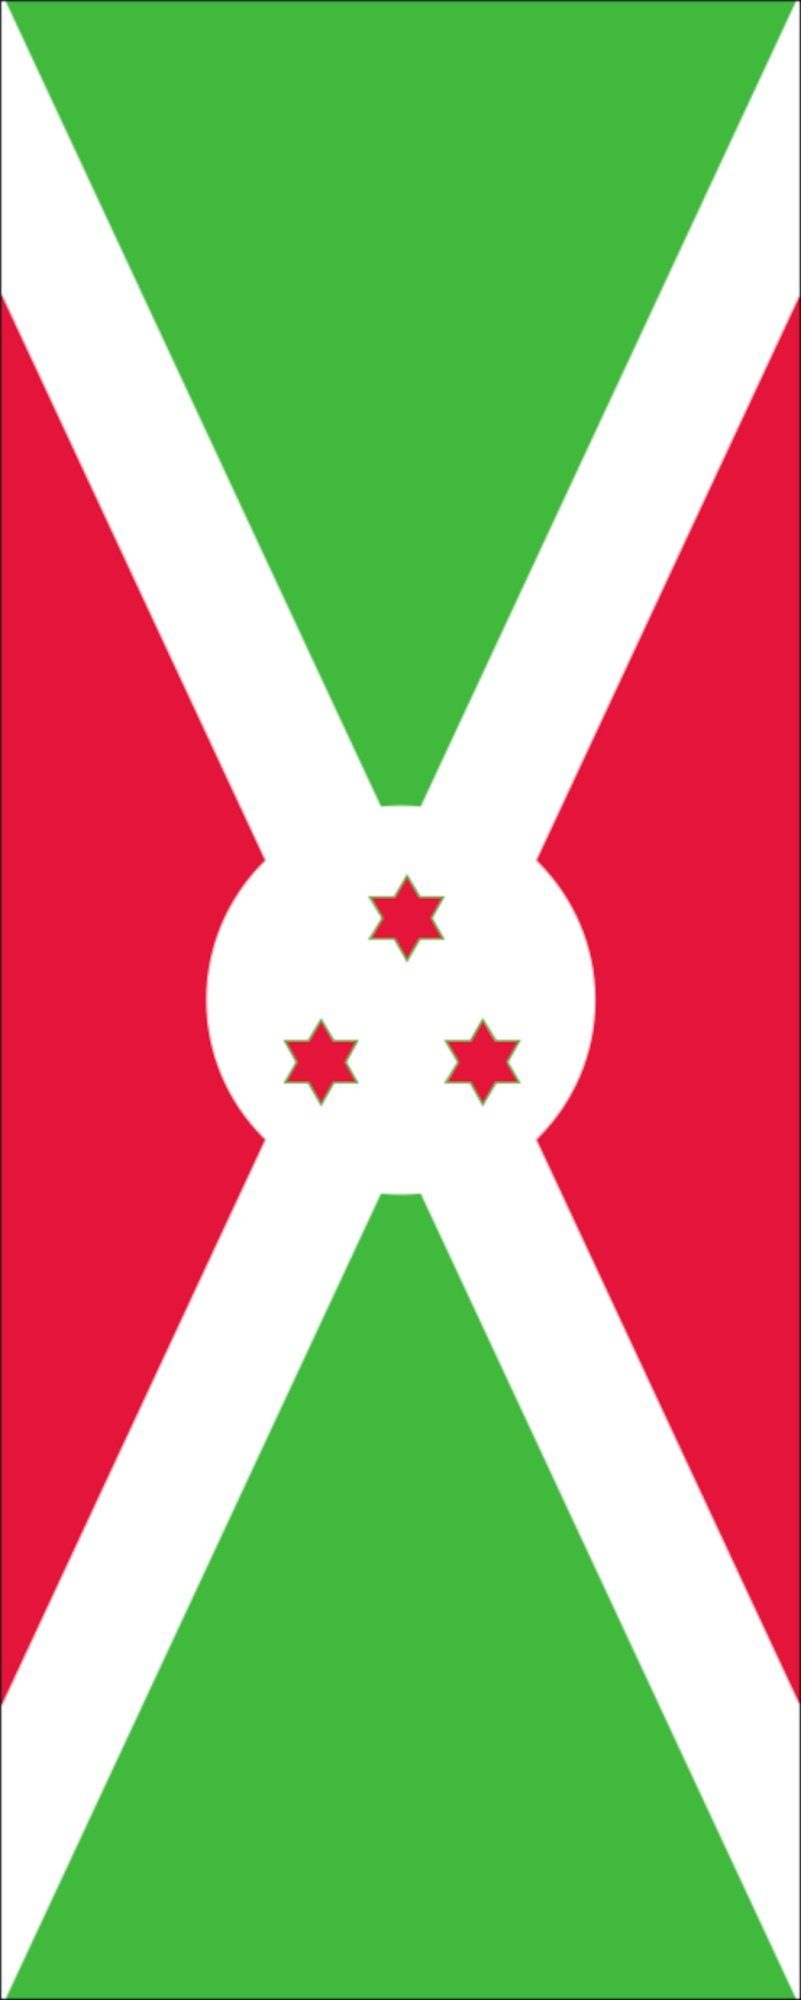 Burundi Flagge g/m² flaggenmeer Hochformat Flagge 110